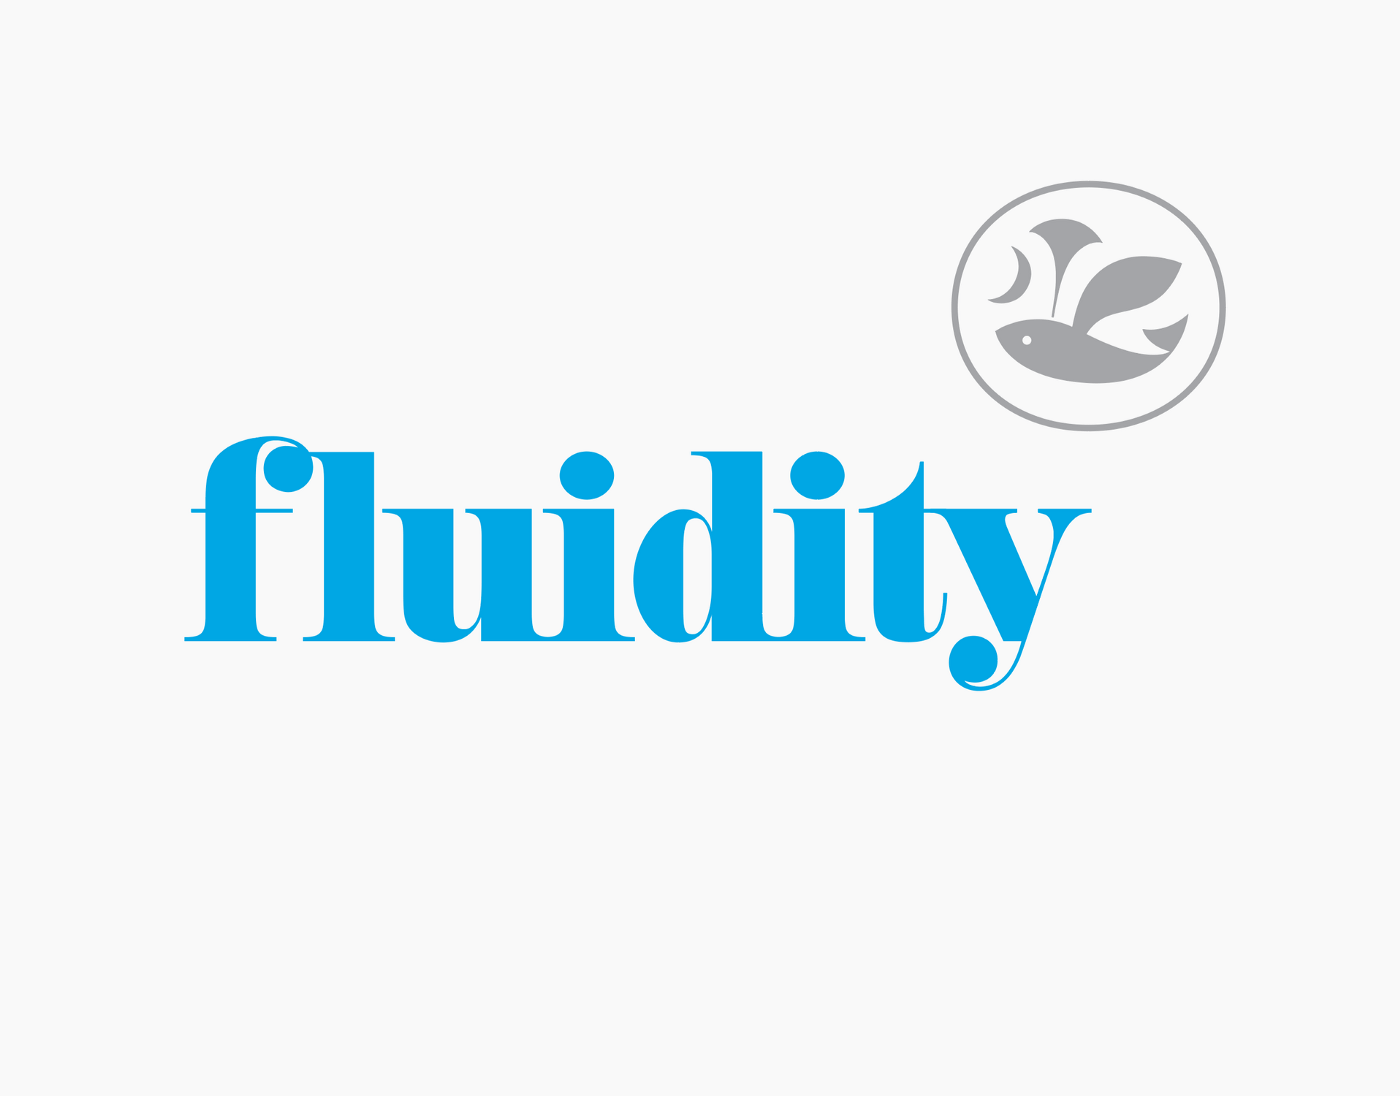 Blue Fluidity logotype with gray, winged-dolphin logo mark